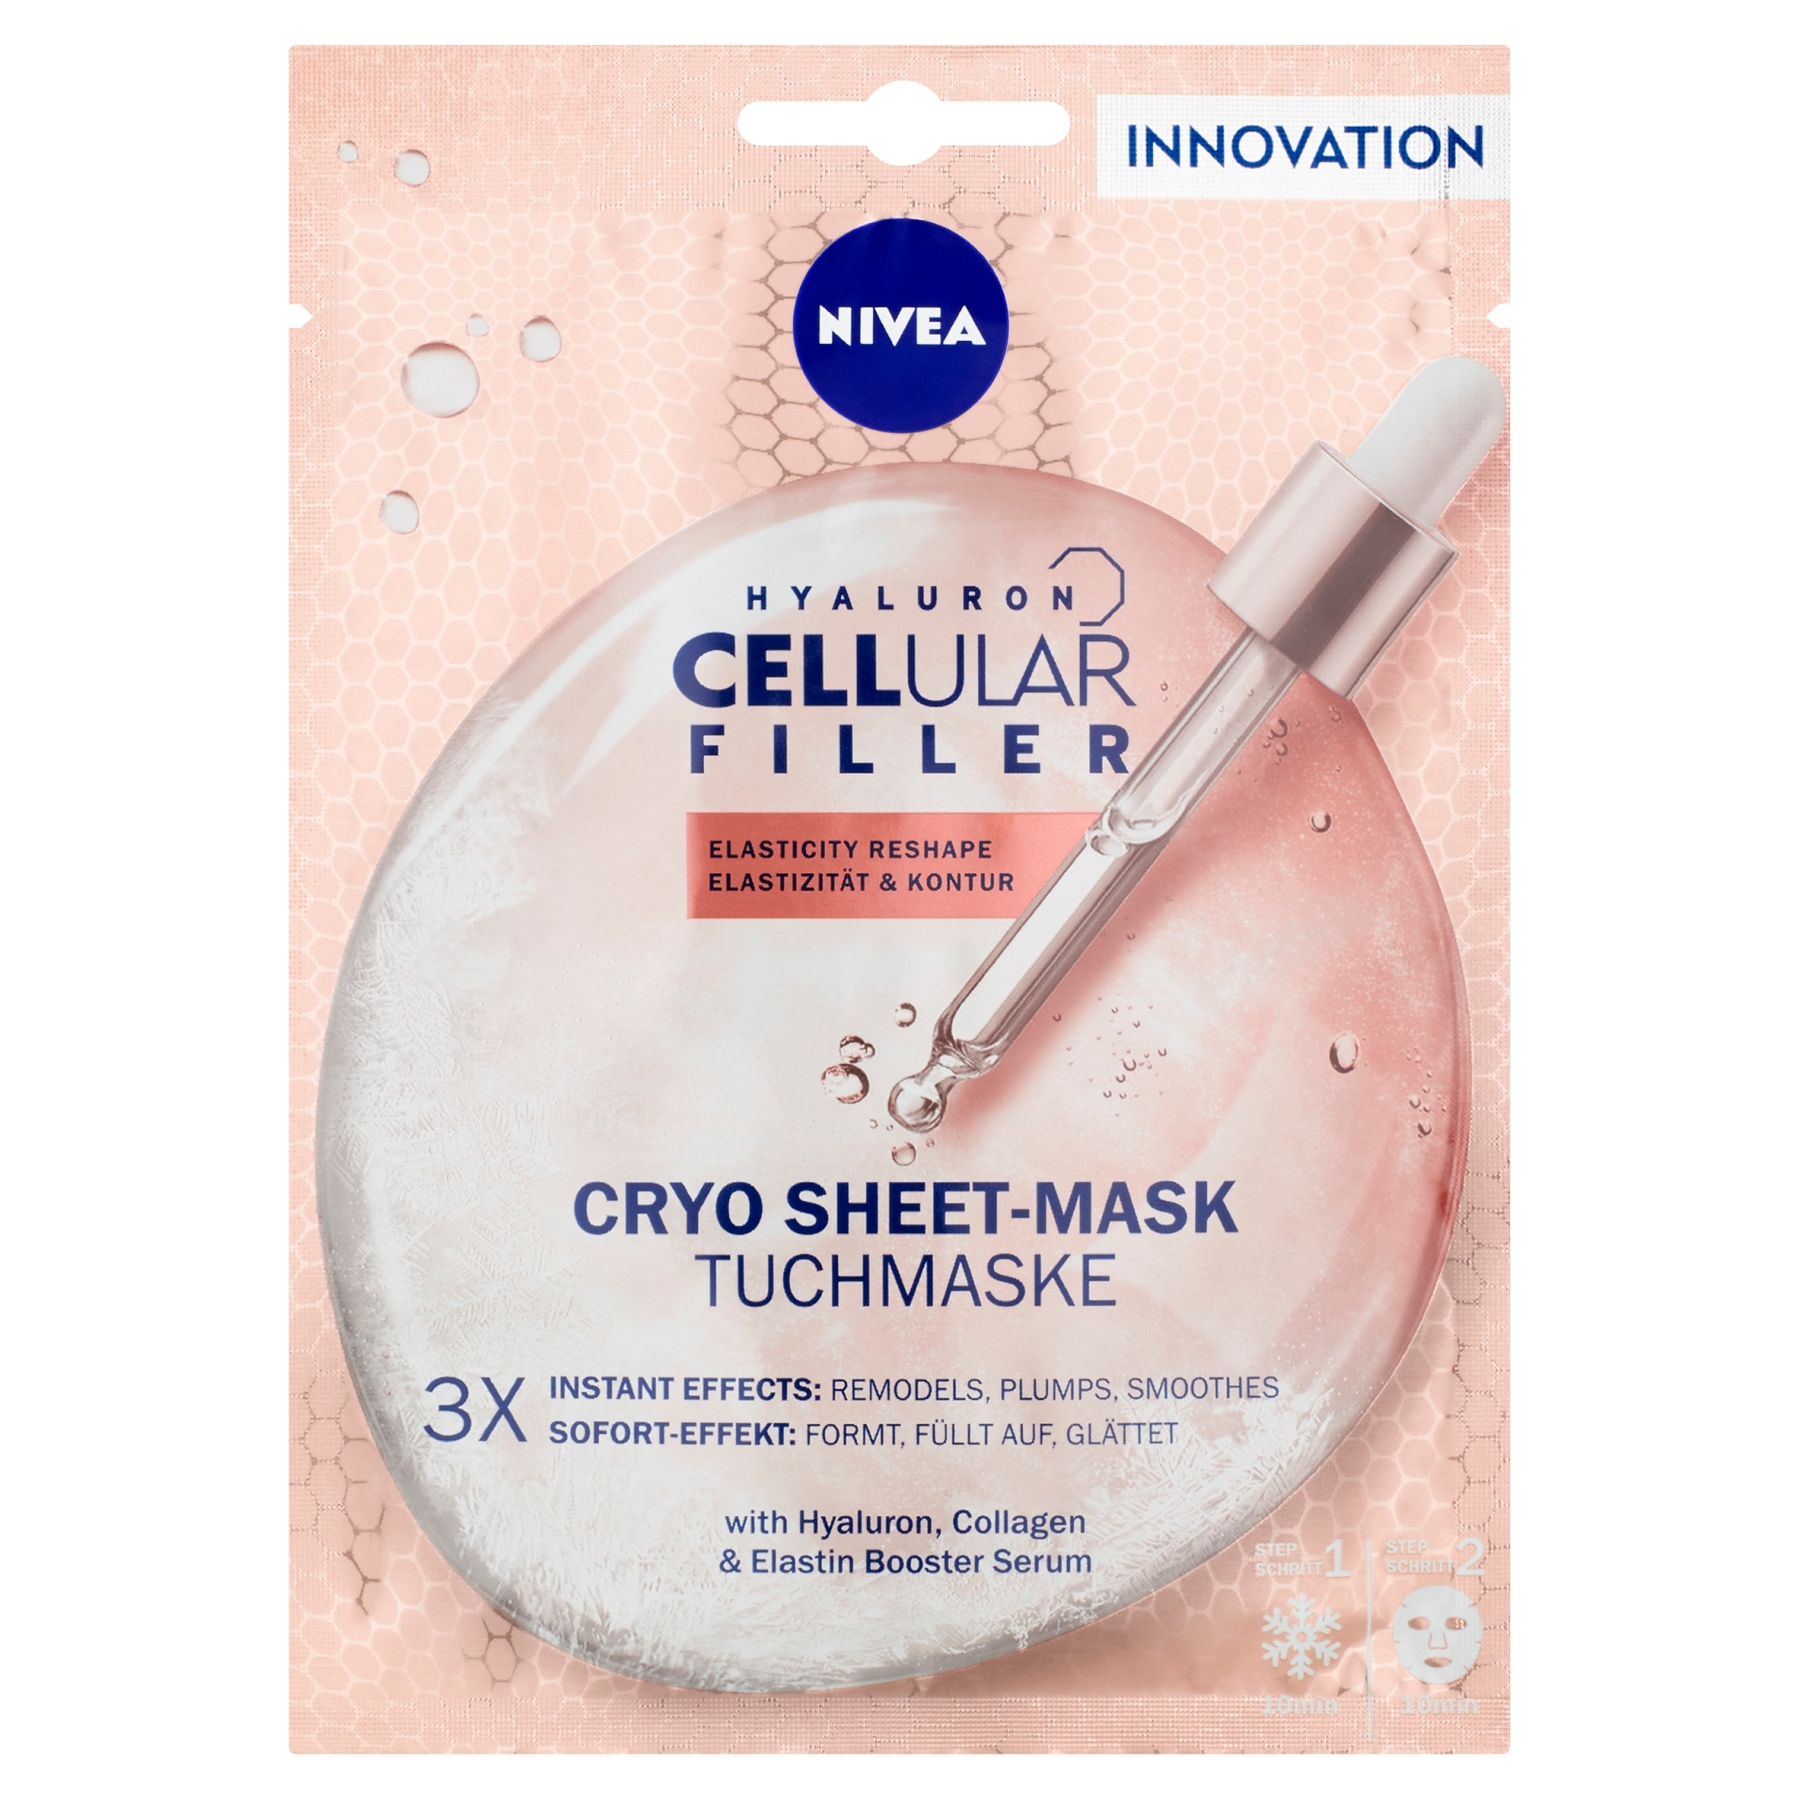 NIVEA Vypĺňajúca textil maska Cellular